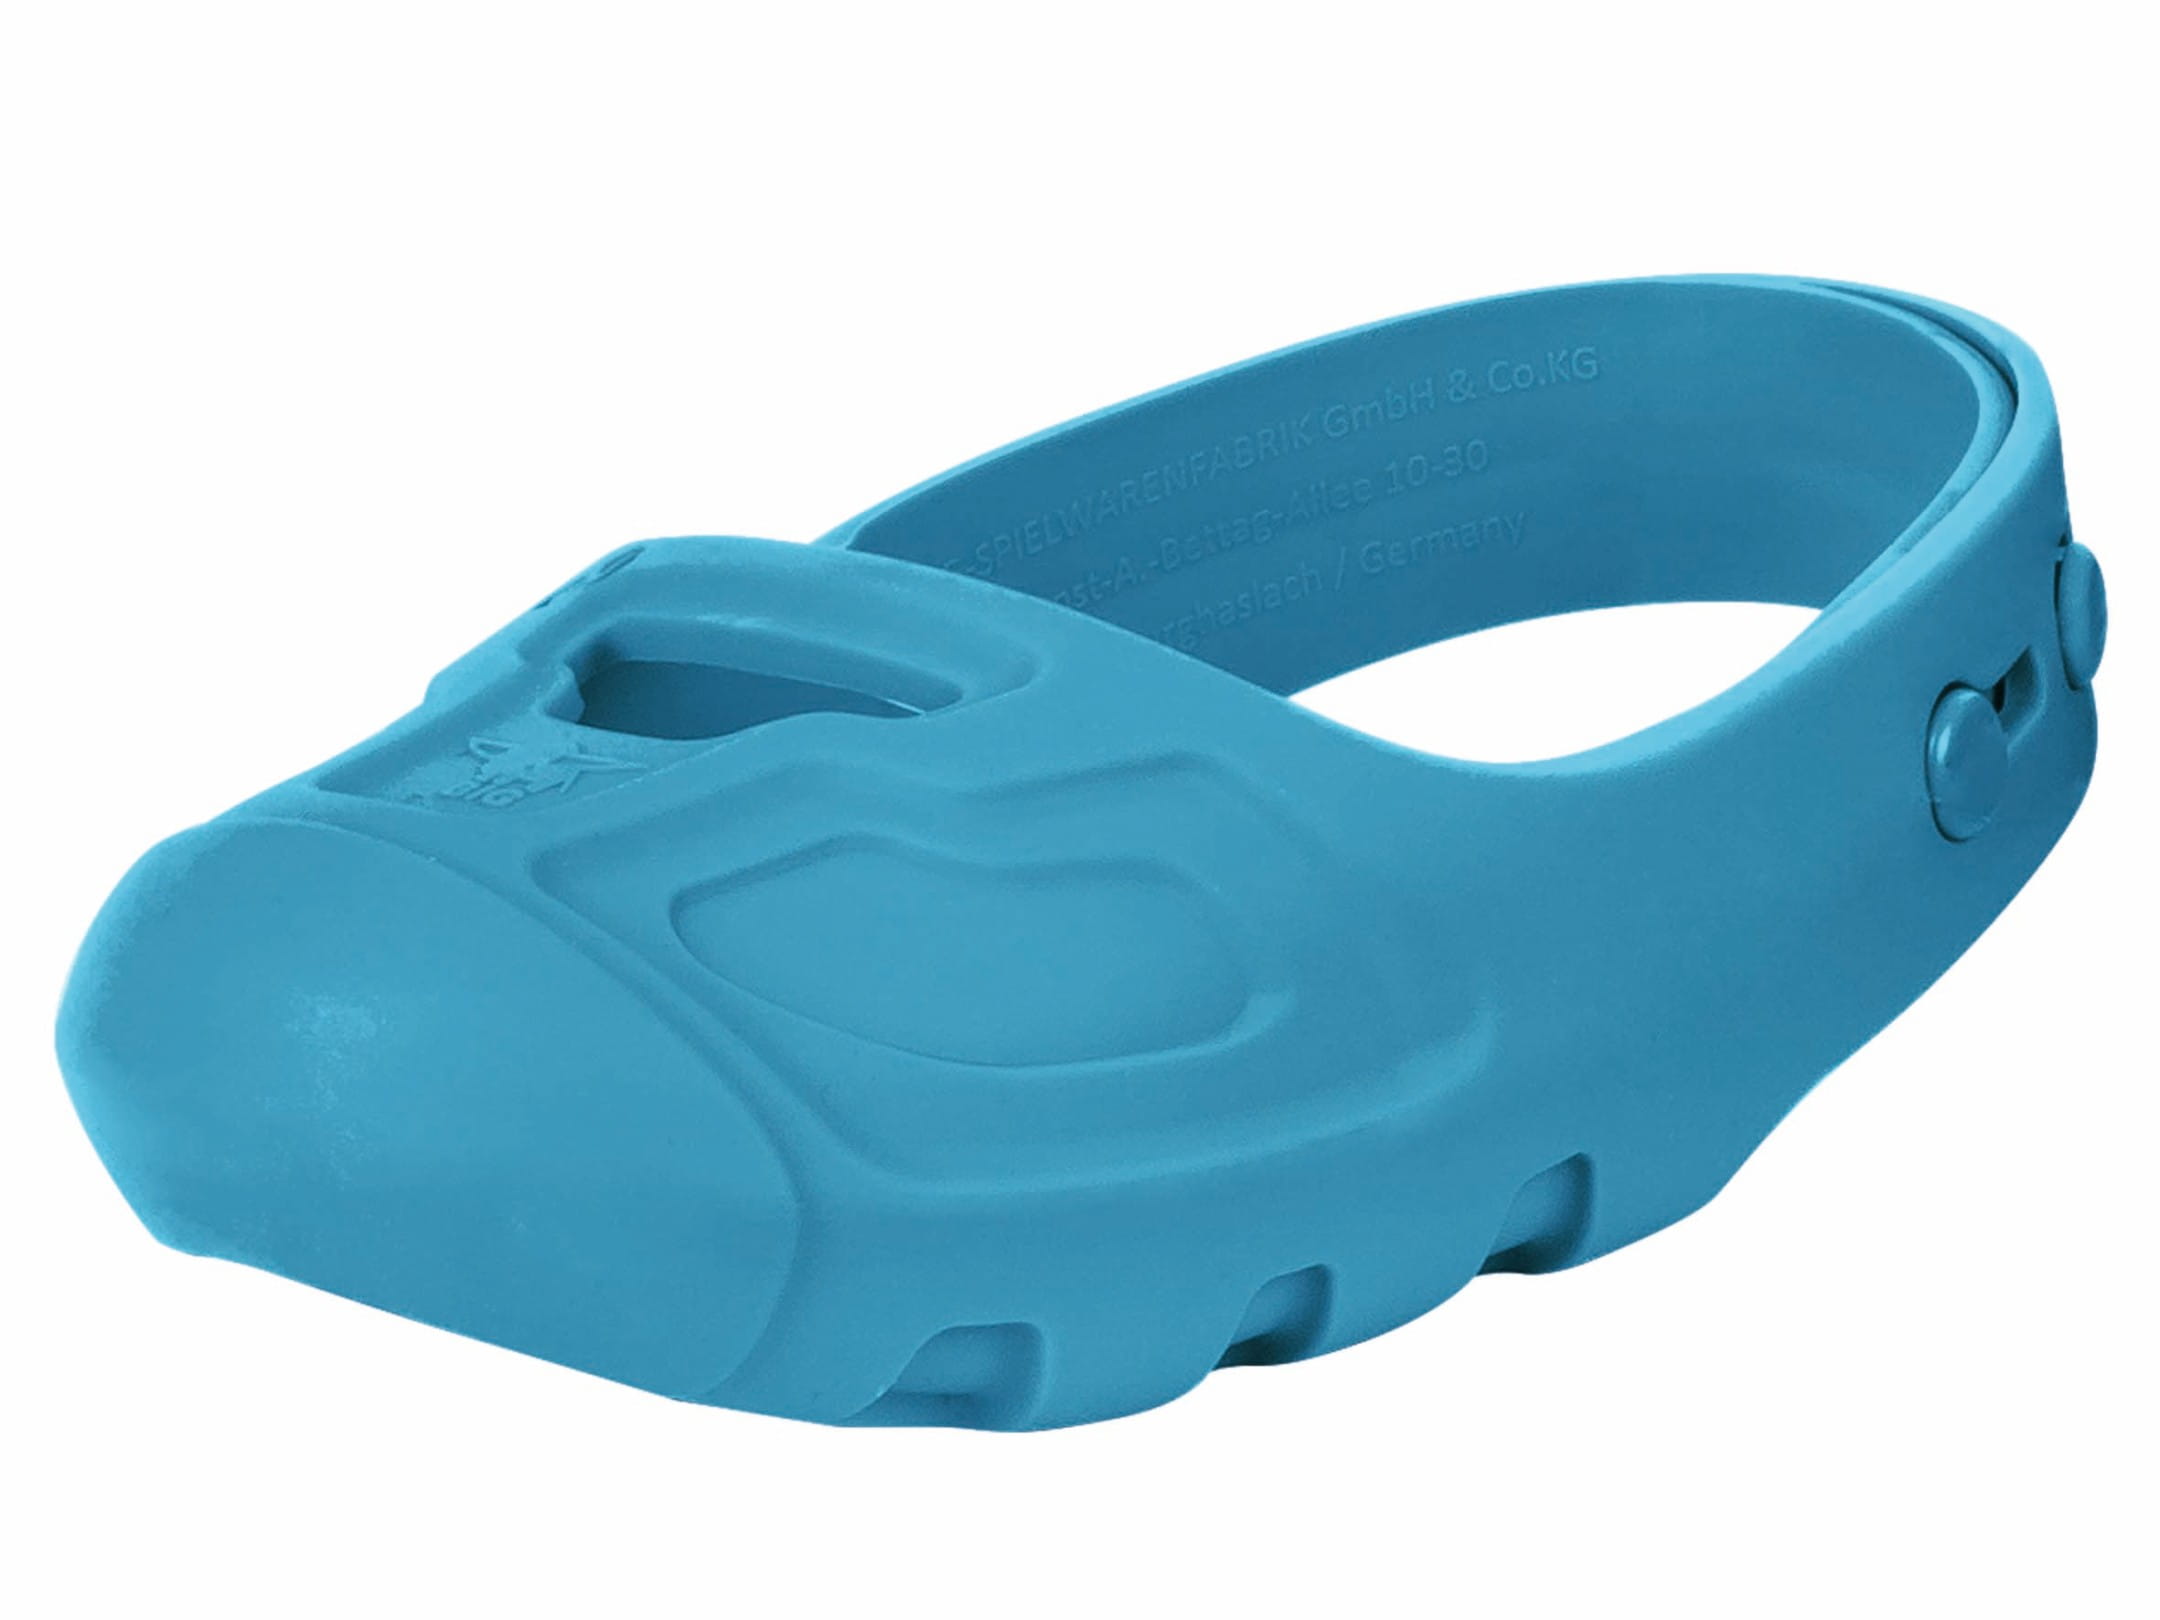 BIG Shoe Care Schuh Schoner blau 21-27